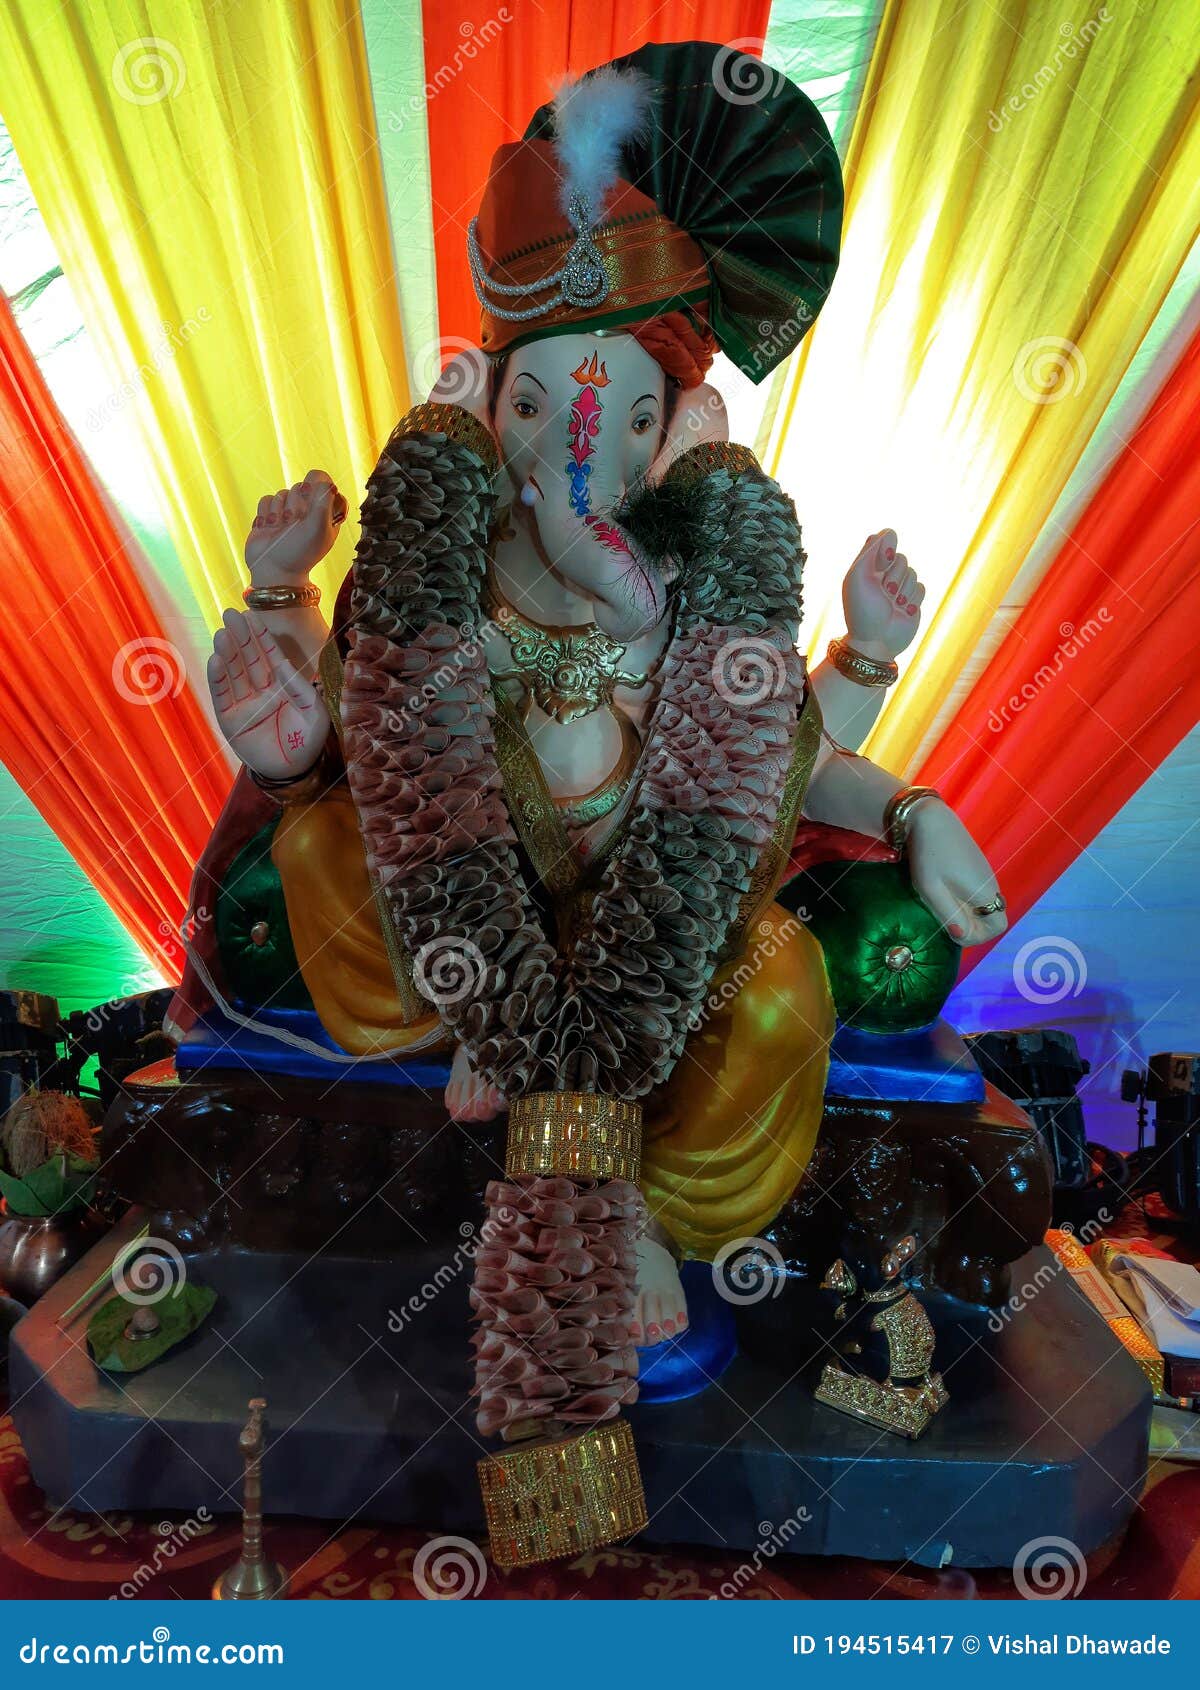 The Attractive Sculpture of Lord Ganesha Ganpatifestival2020 ...